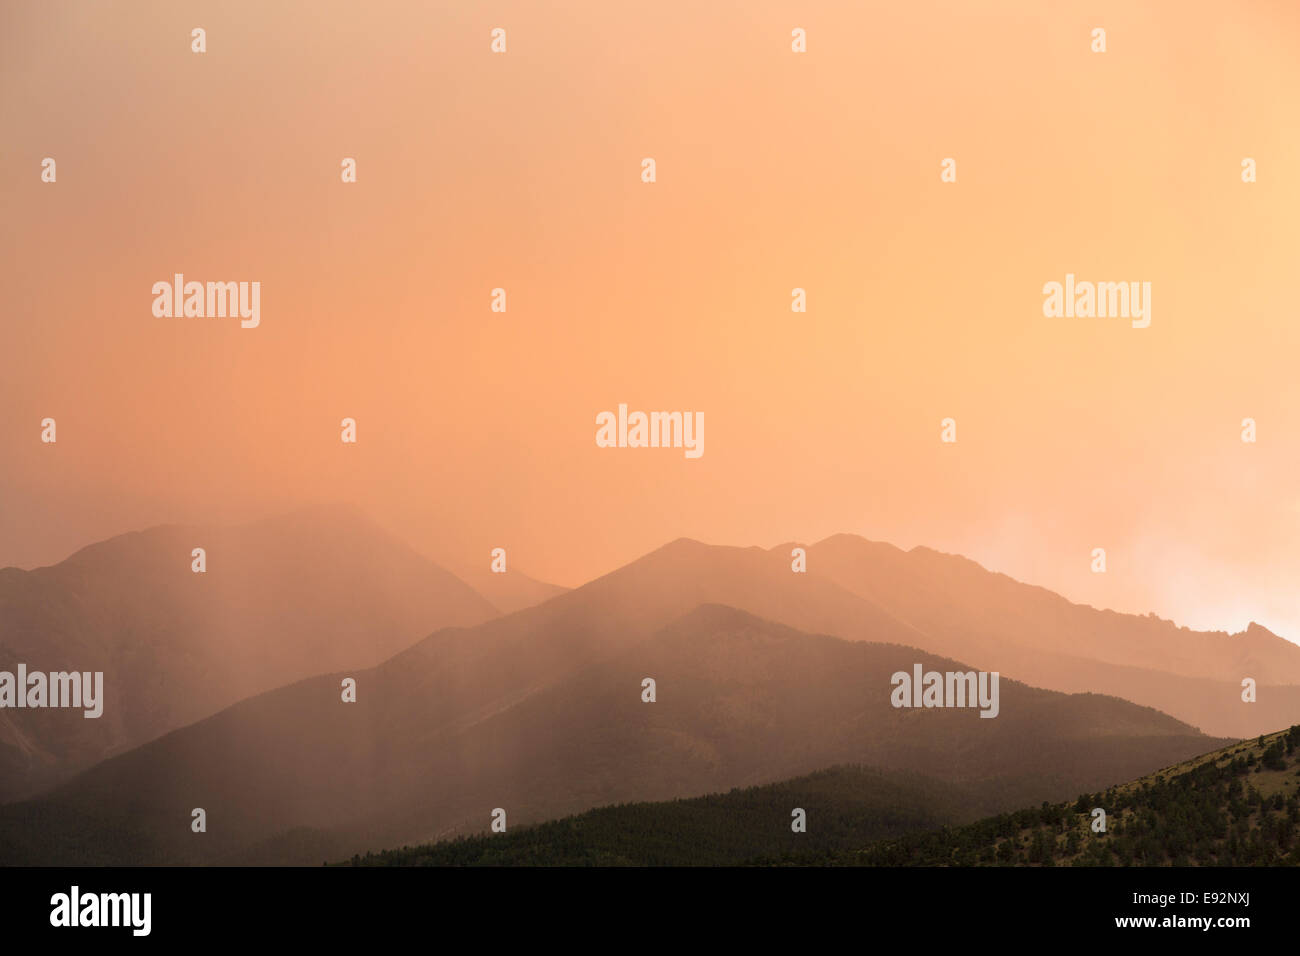 Colorado mountains, USA at sunset with rain falling Stock Photo